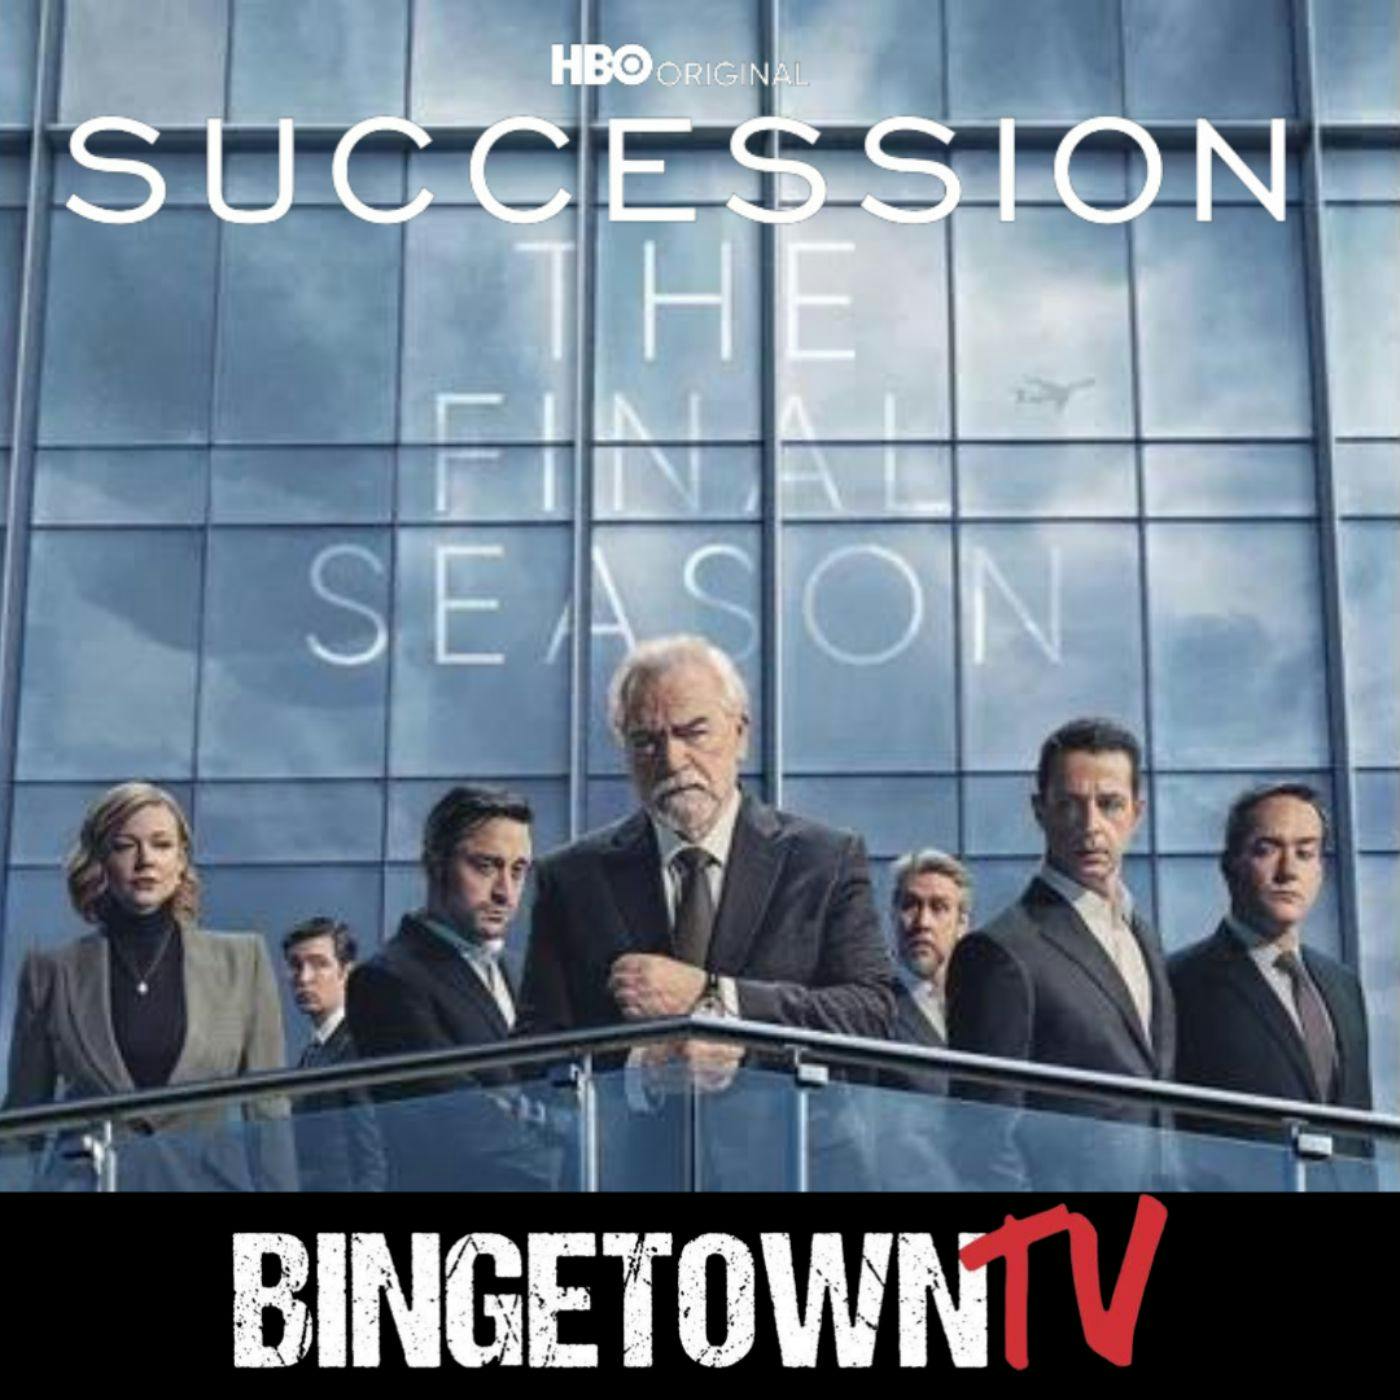 Succession: A BingetownTV Podcast